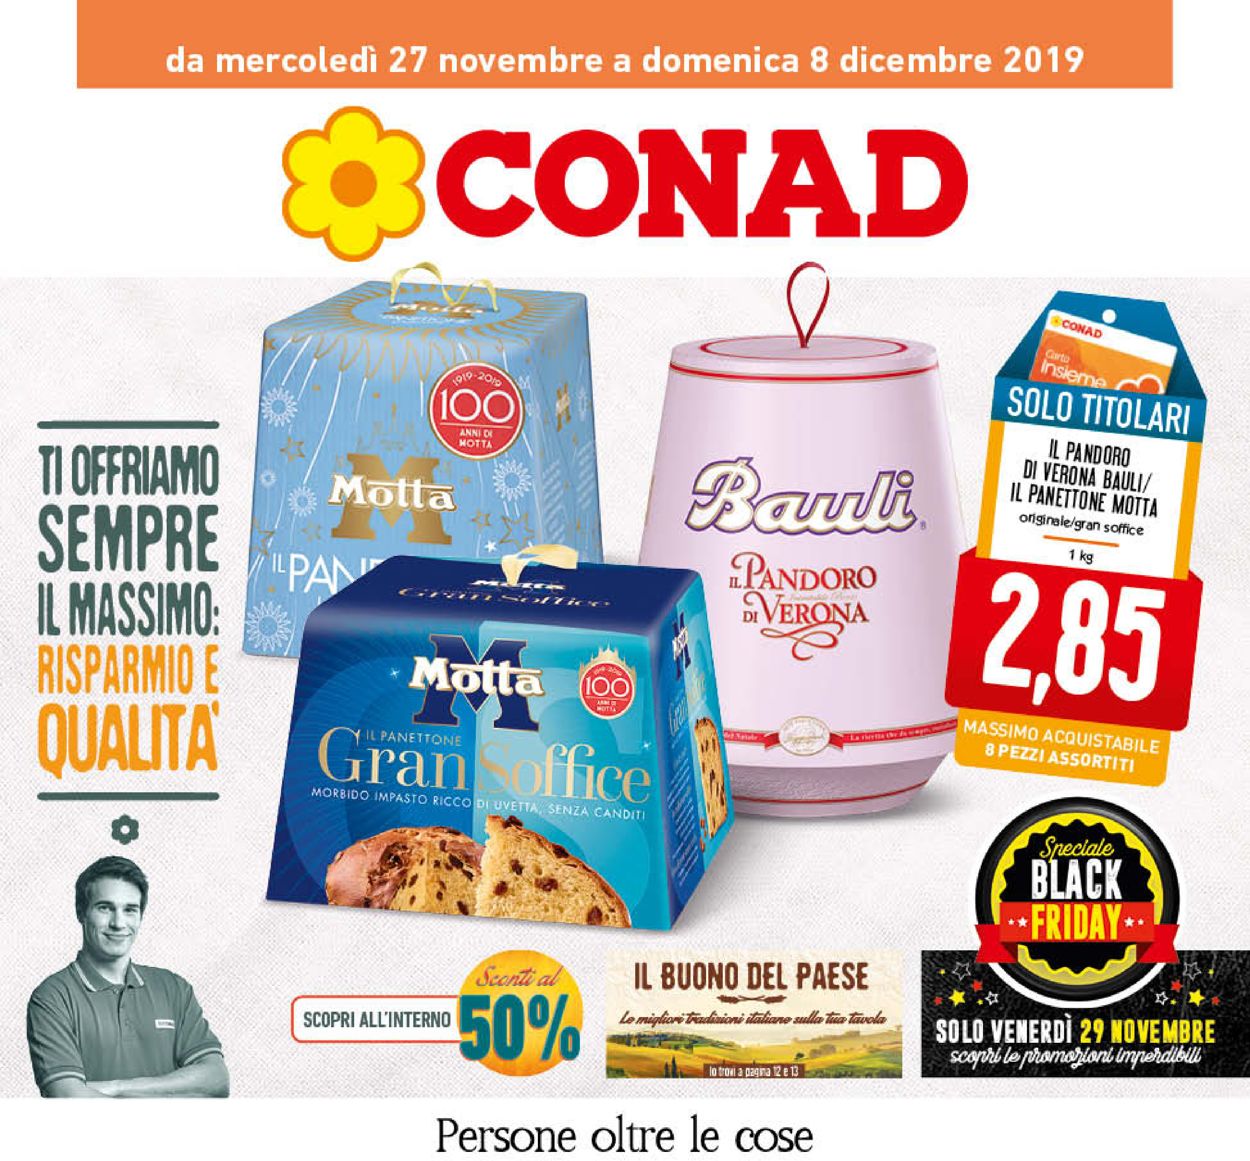 Volantino Conad - Black Friday 2019 - Offerte 27/11-08/12/2019